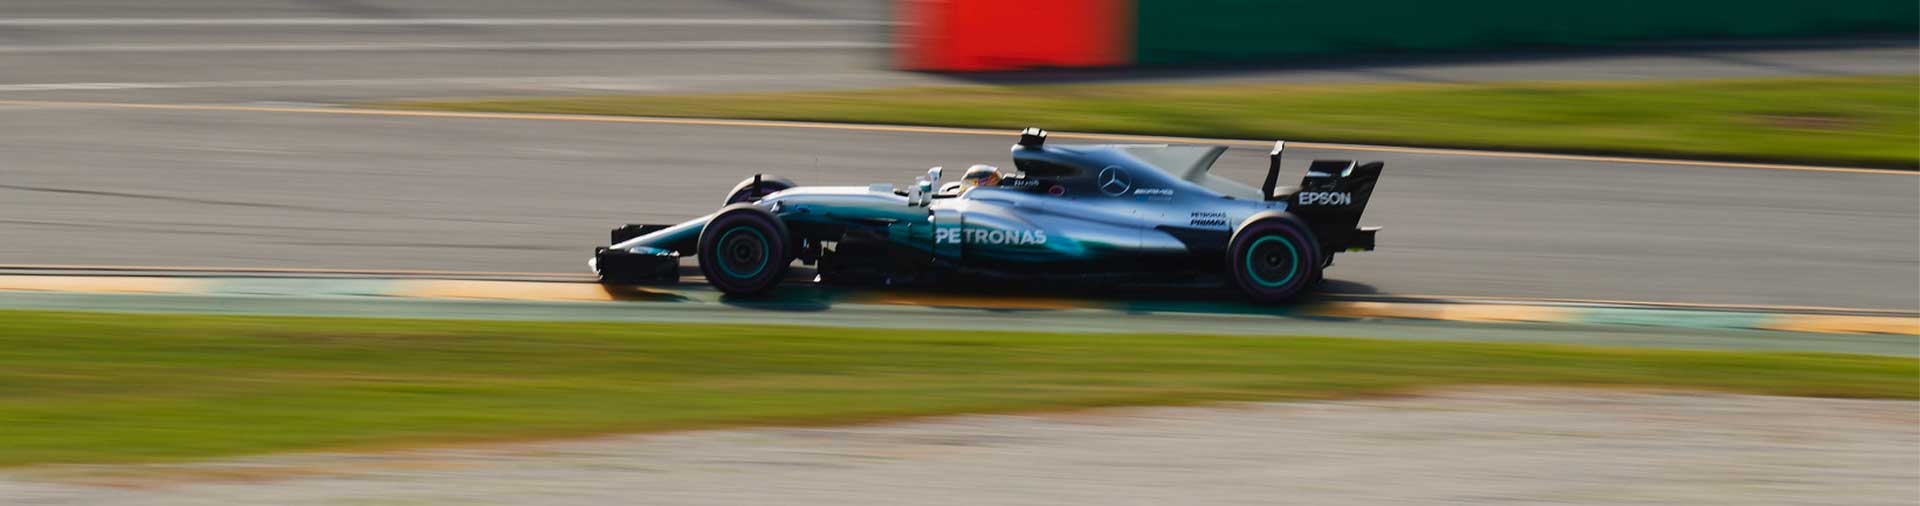 grand-prix-racing-car-with-panning-motion-blur